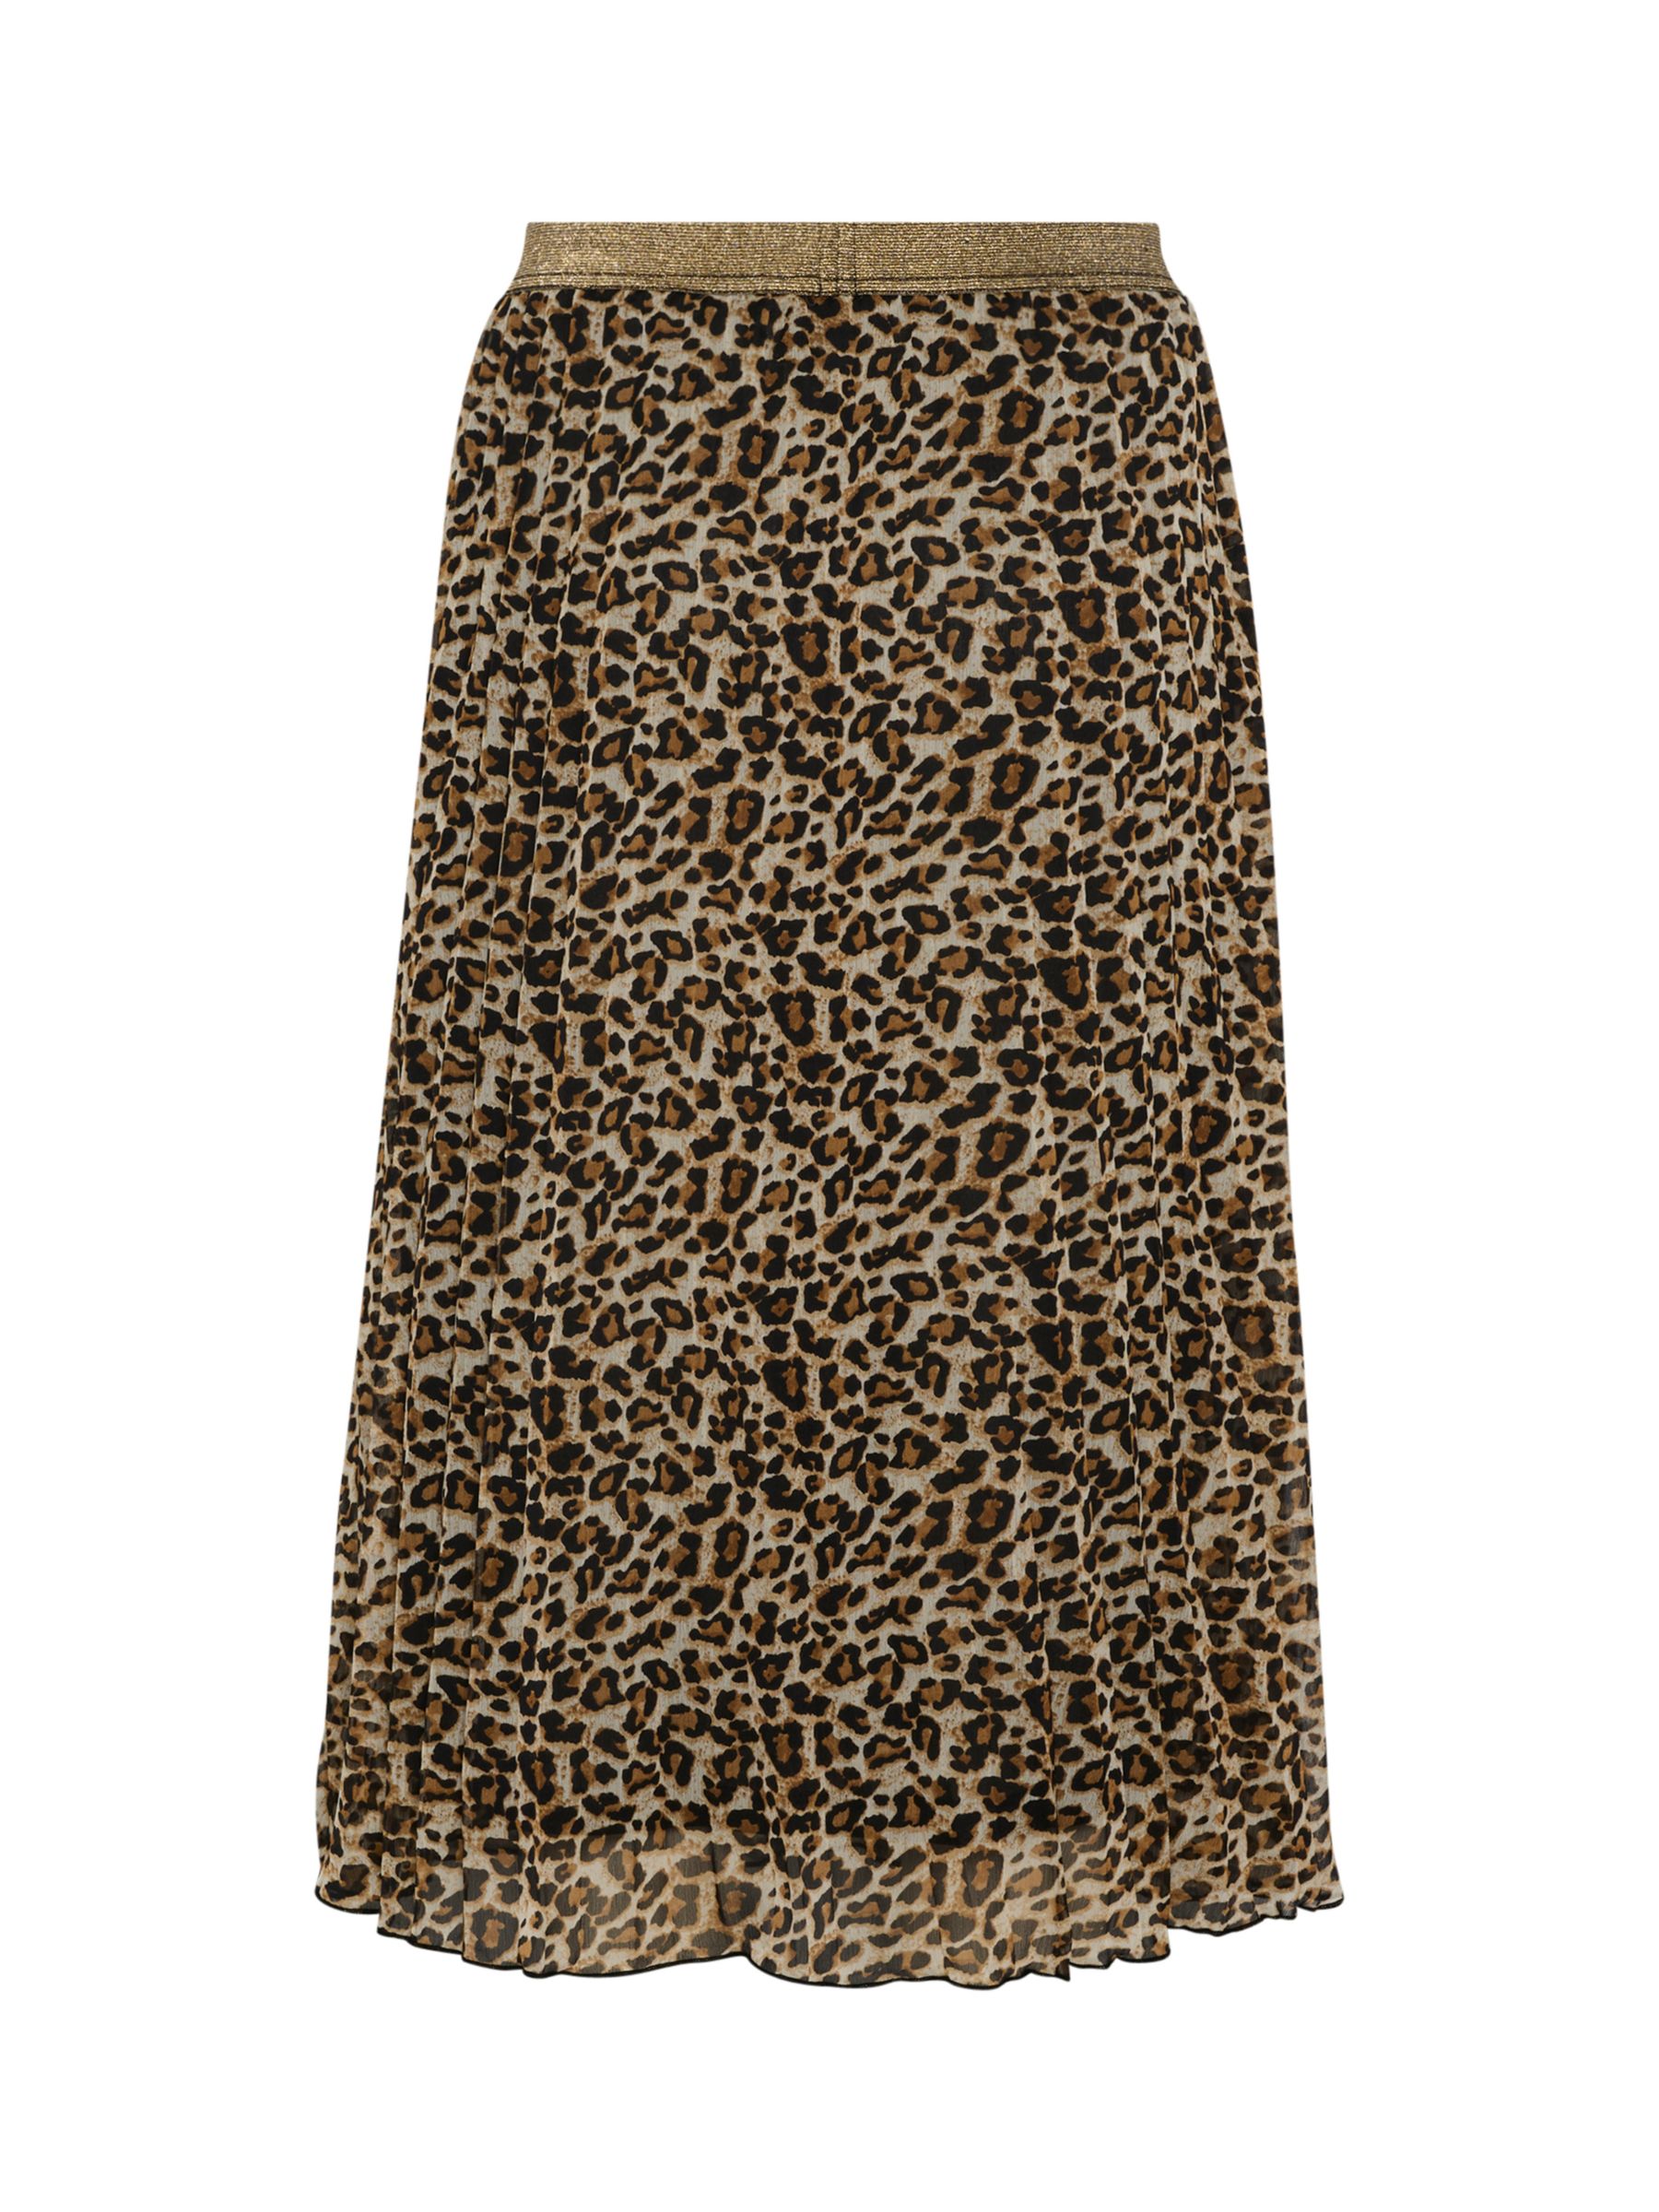 Buy Saint Tropez Xia Animal Print Skirt, Black/Multi Online at johnlewis.com